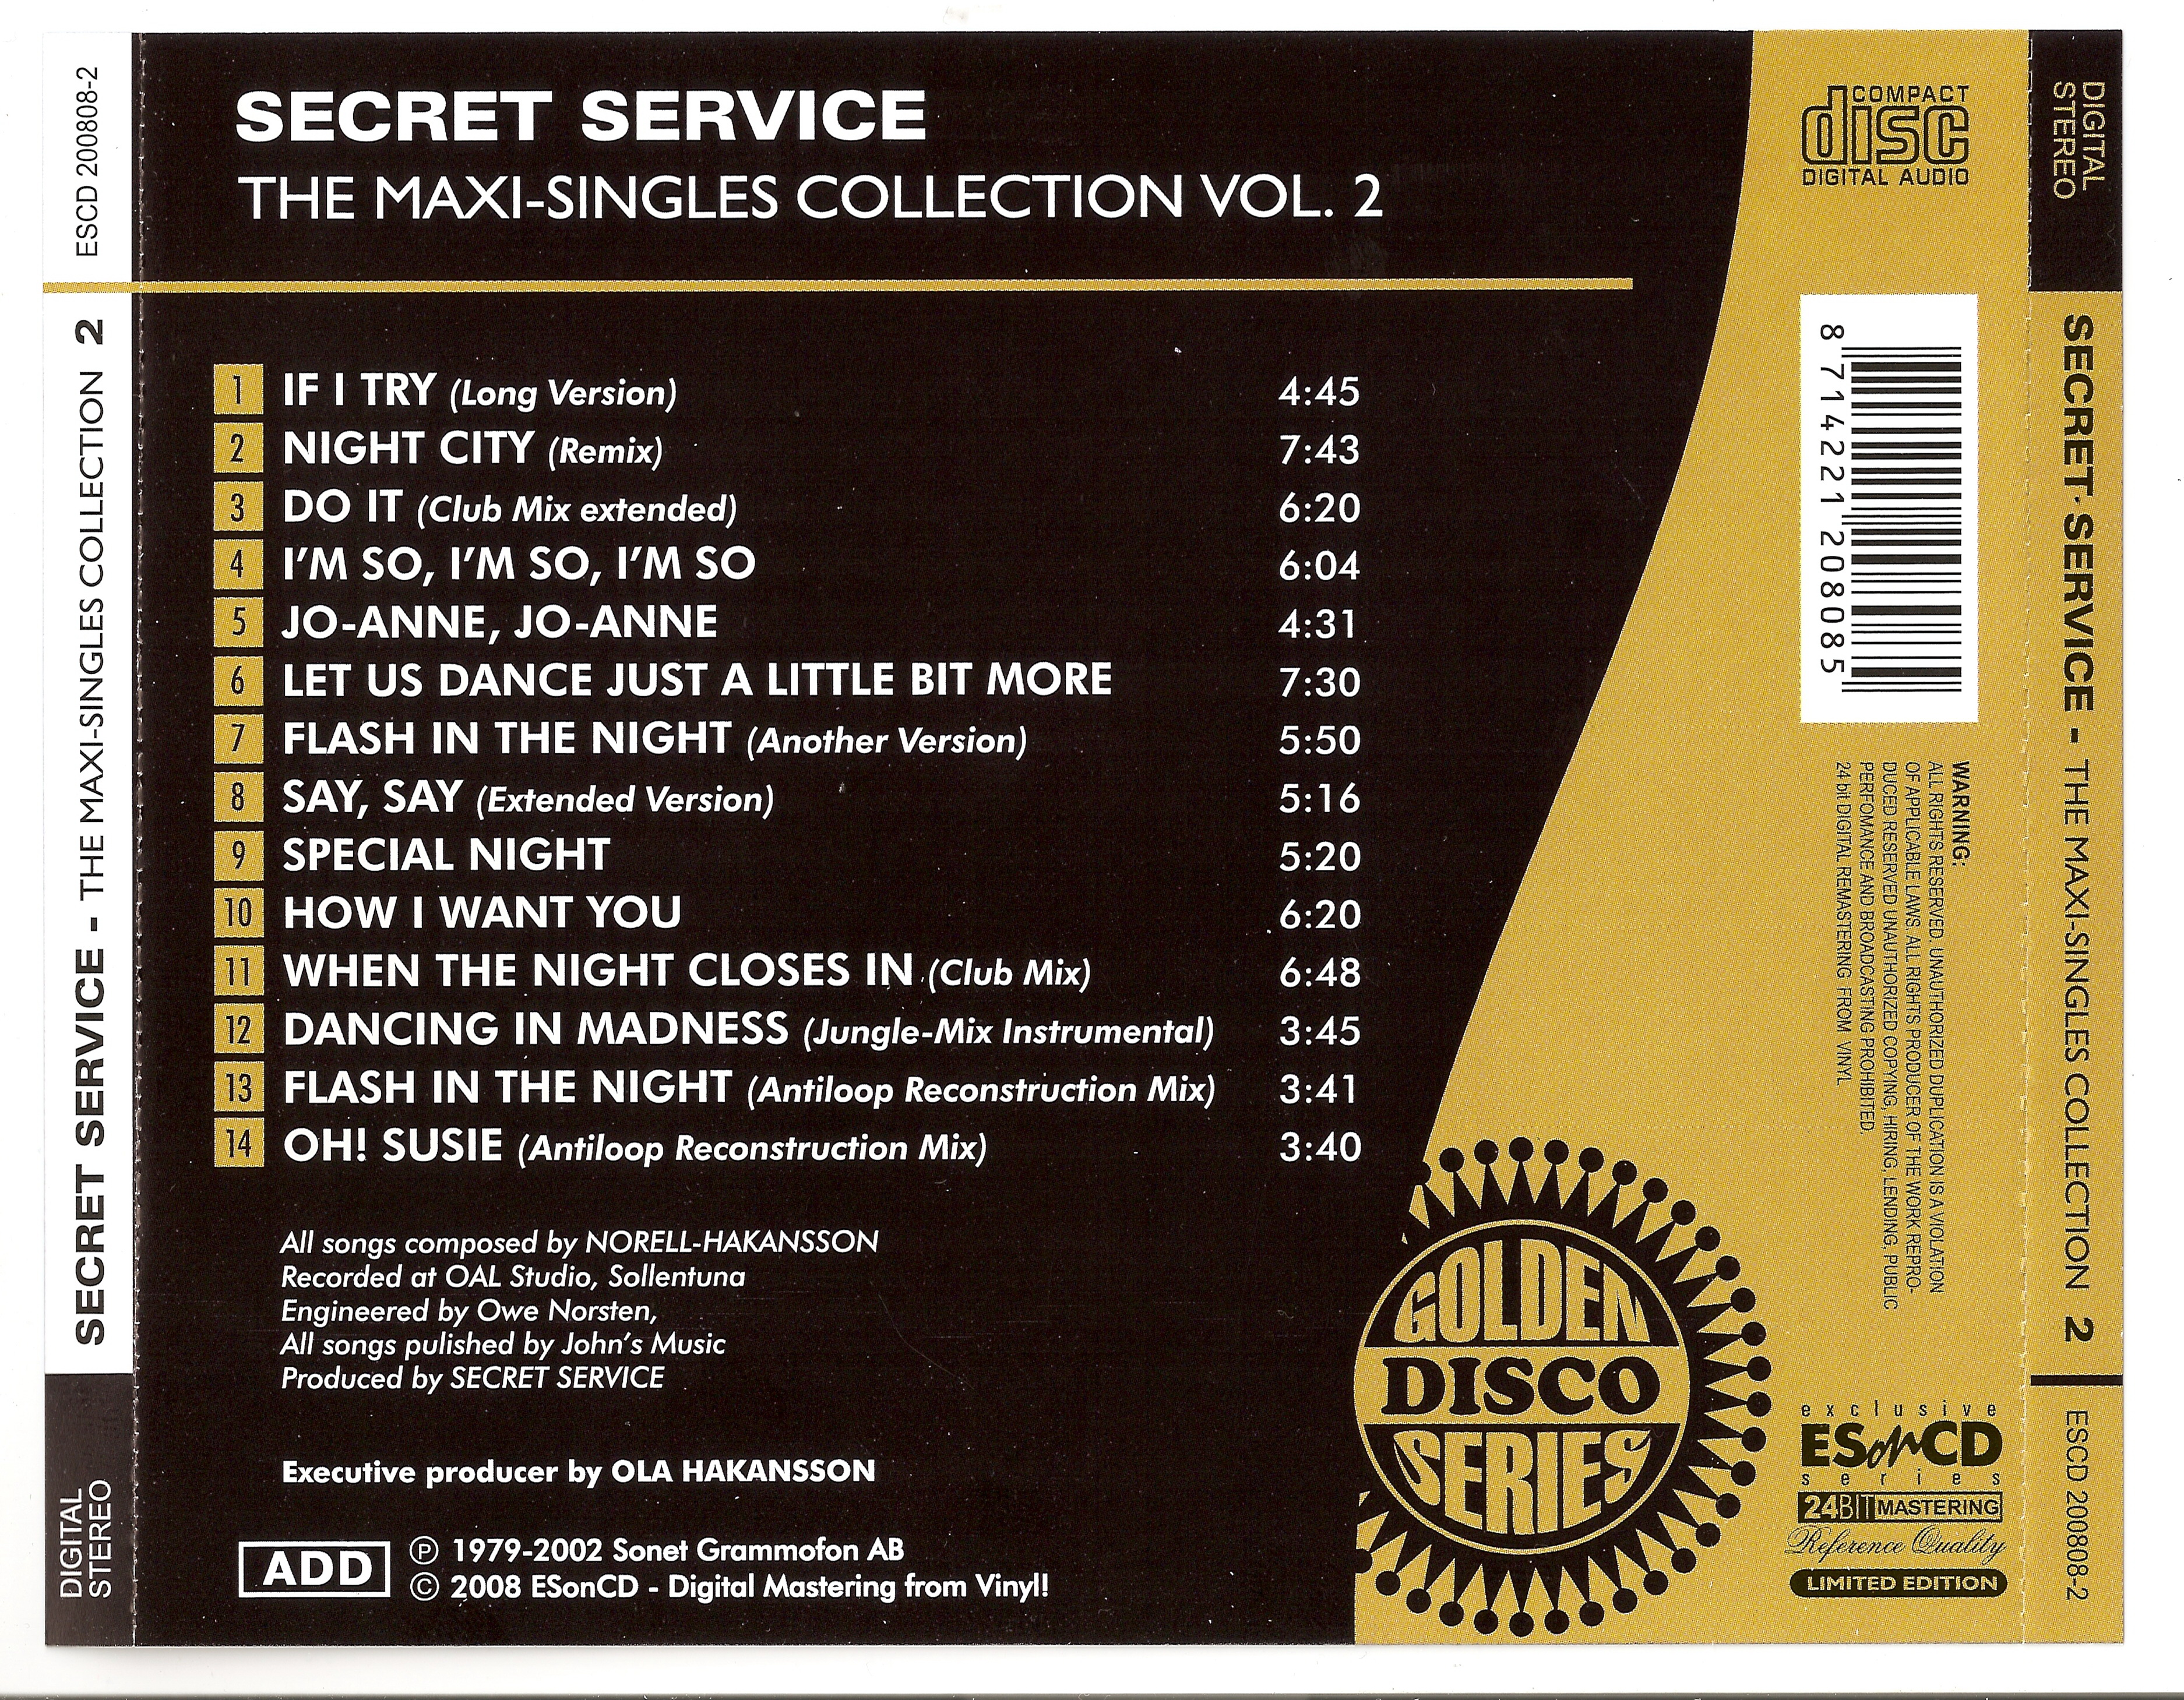 2008 - The Maxi-Singles Collection vol. 2 - 02.jpg